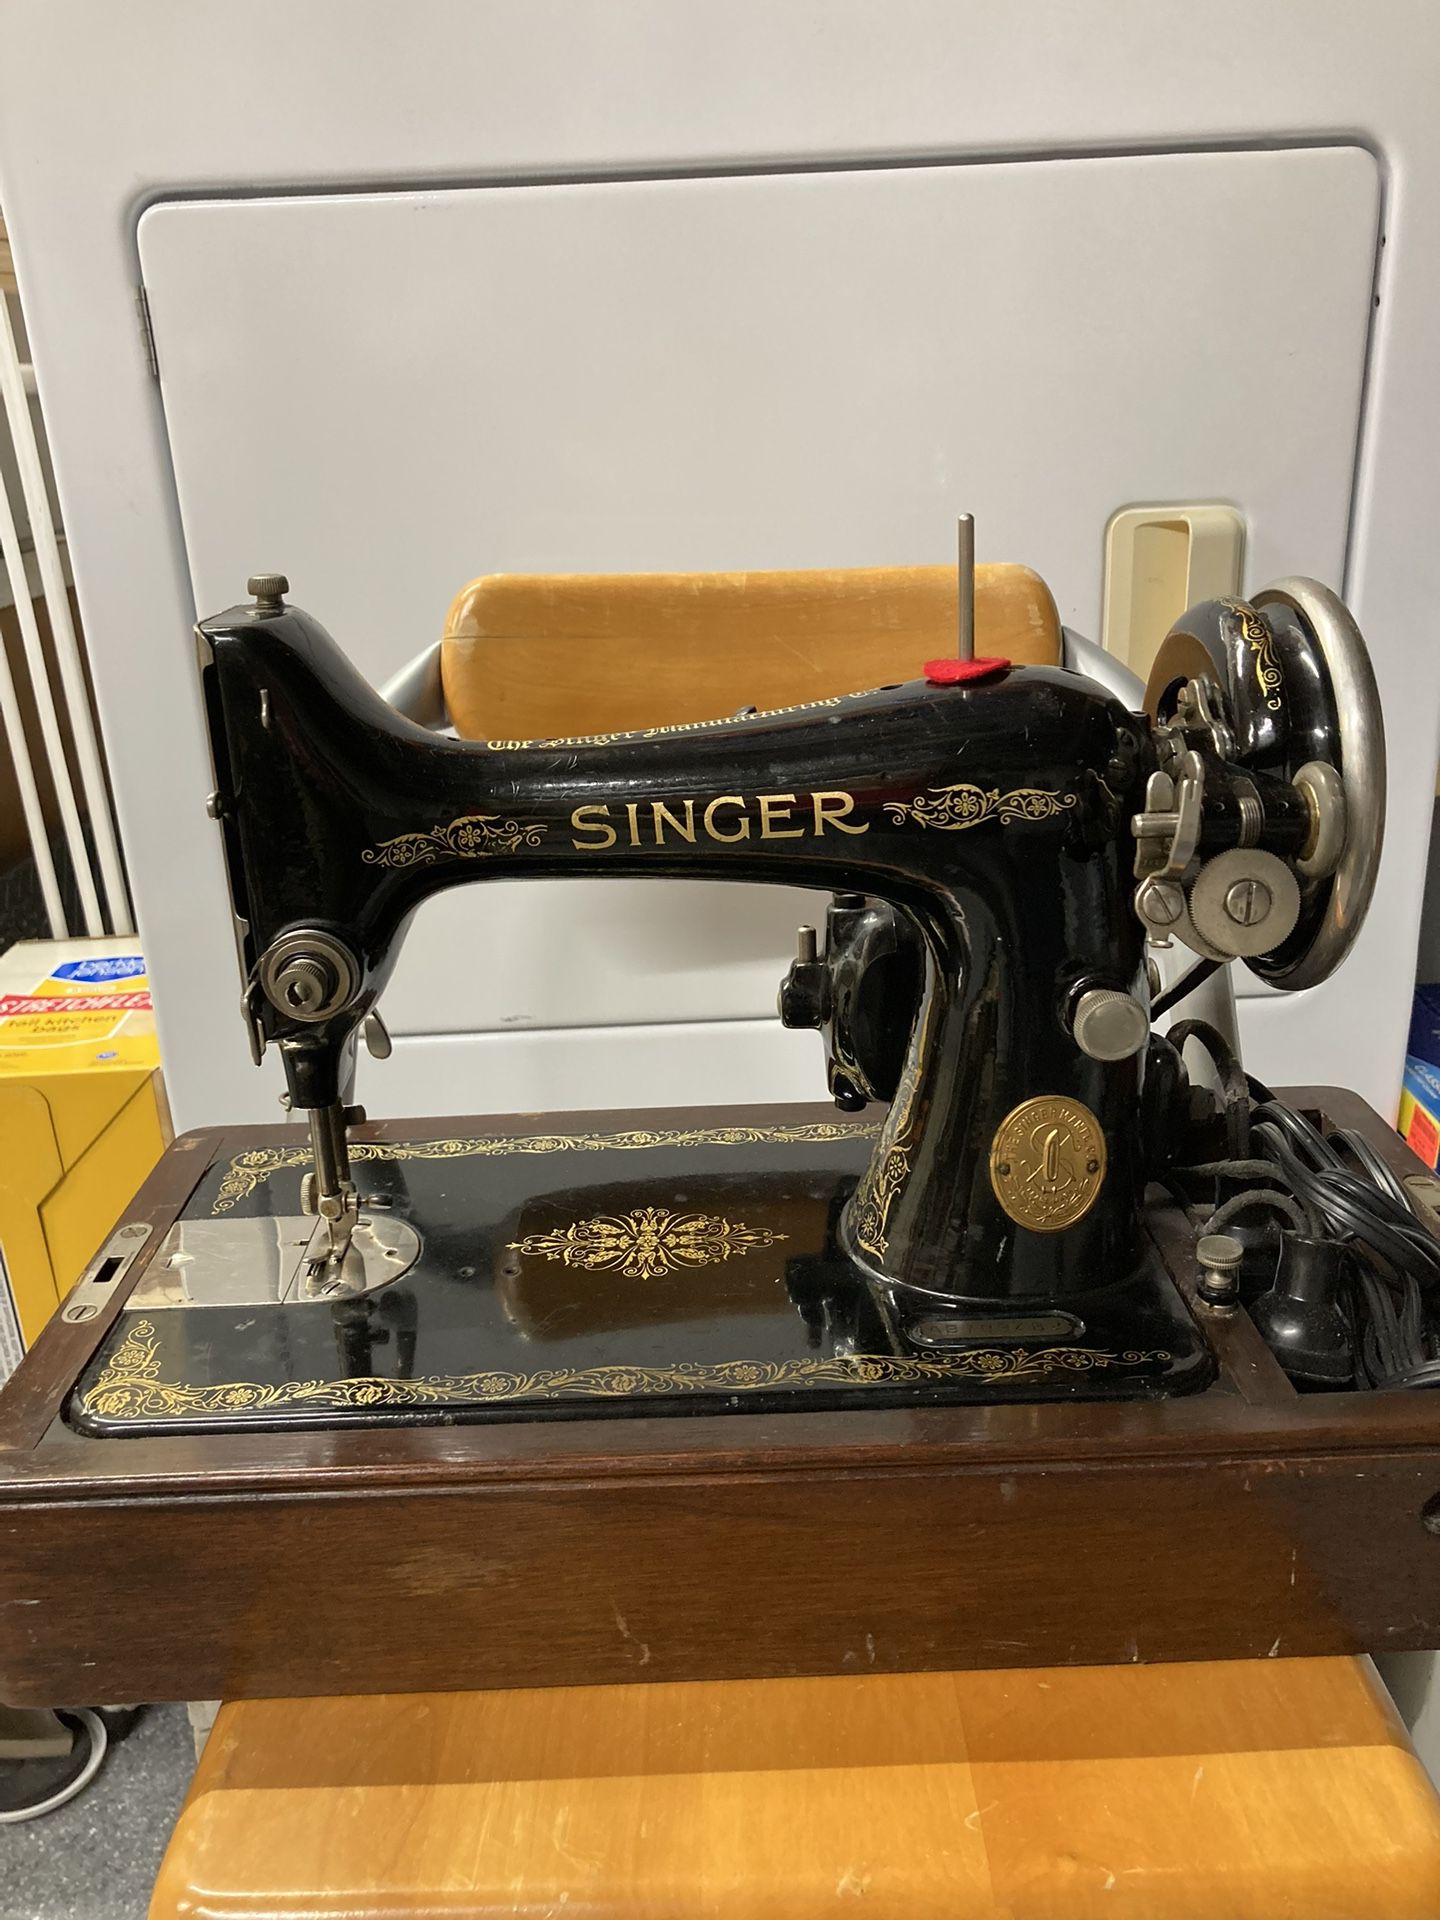 1927 Singer sewing machine in case